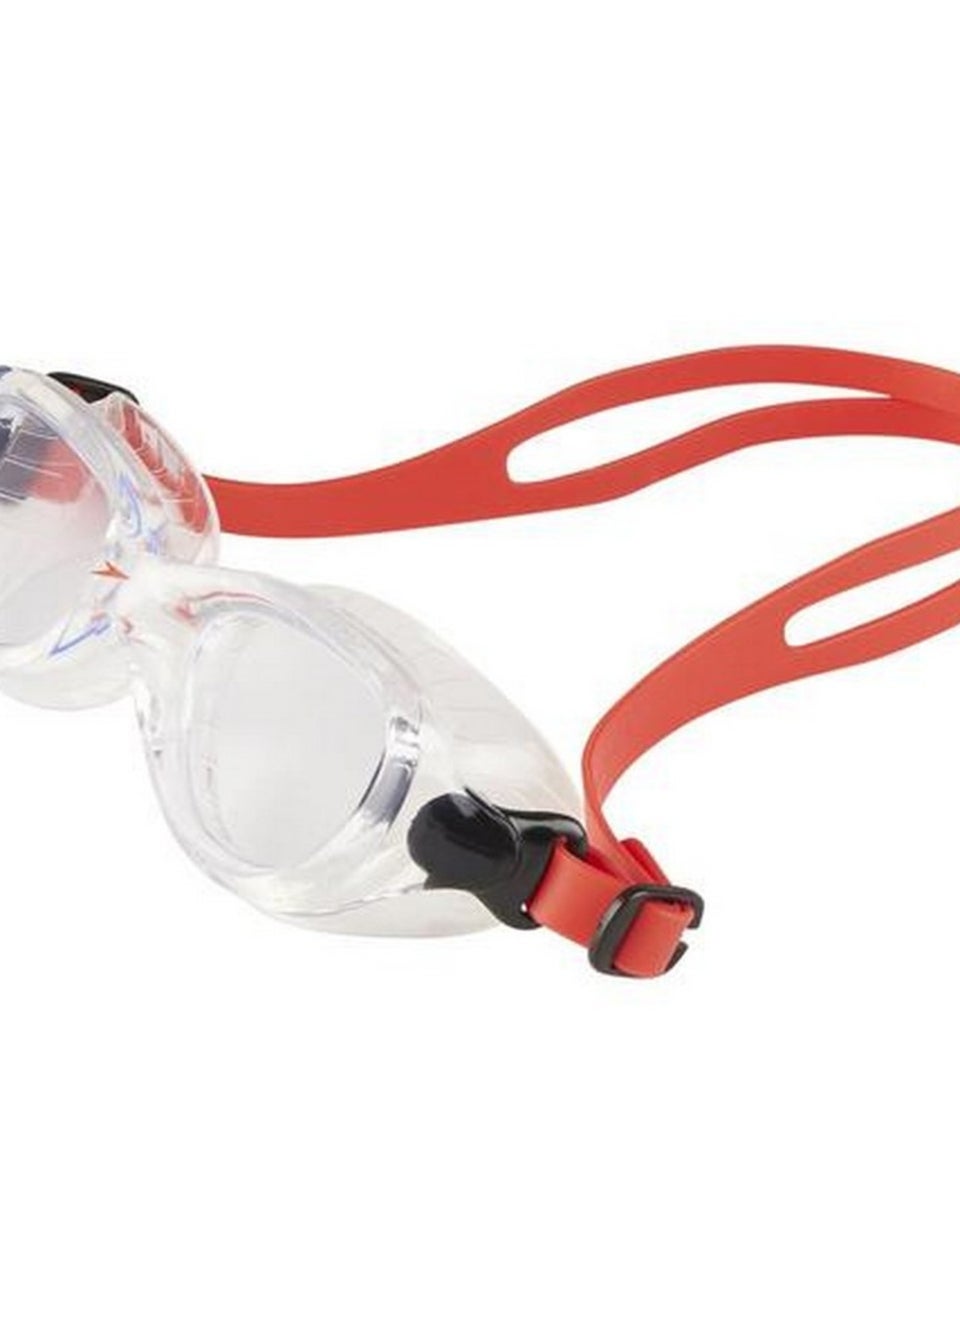 Speedo Kids Red Futura Classic Swimming Goggles